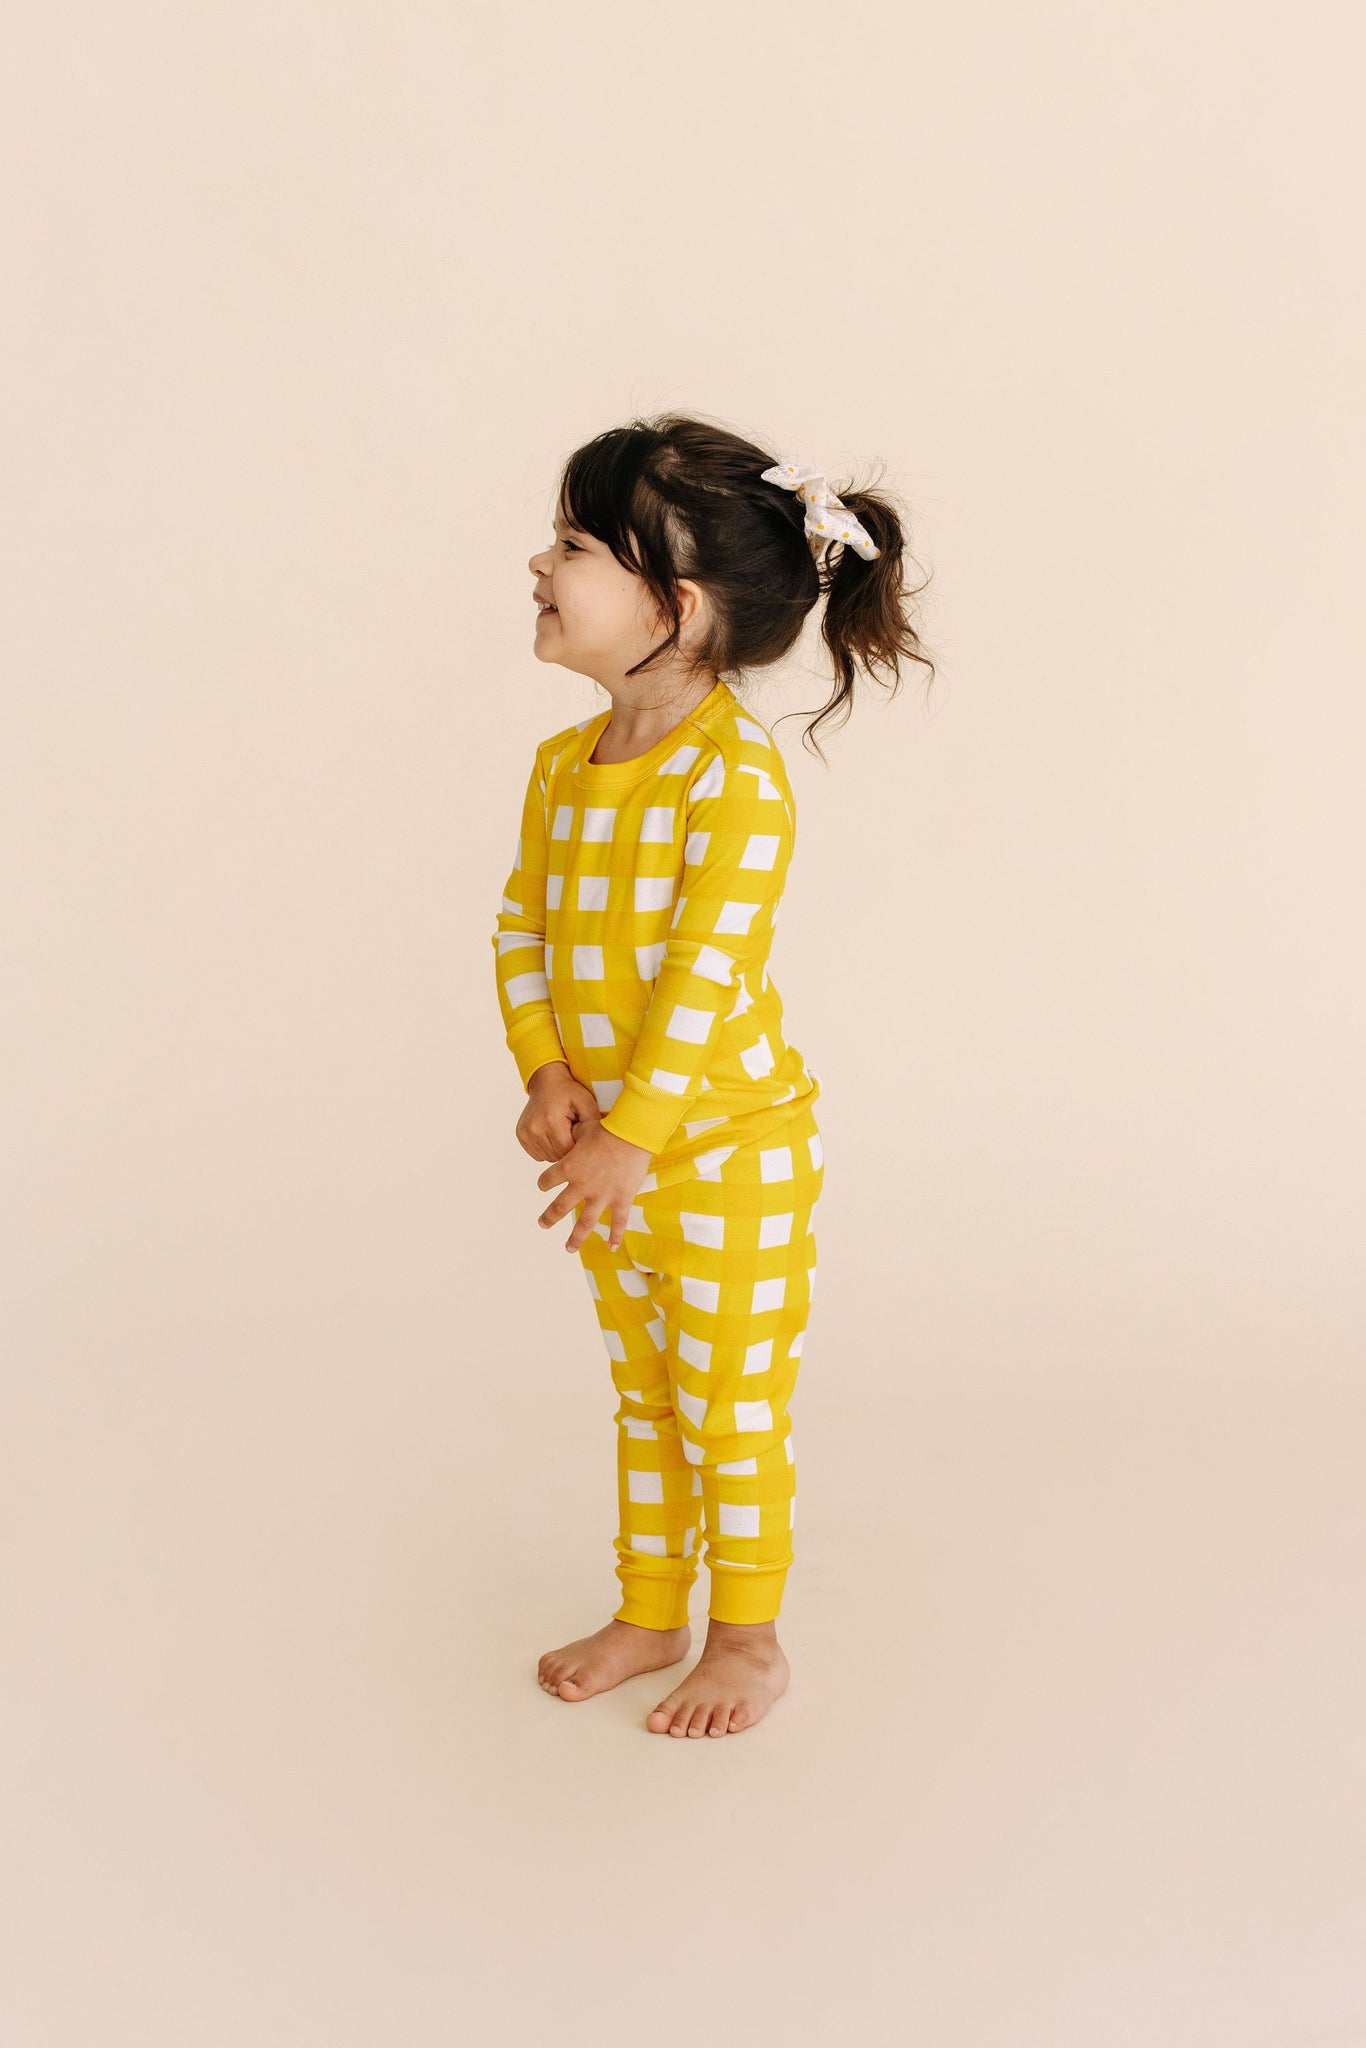 Children's Organic Cotton Pajamas in 100% Cotton in Yellow Gingham Print